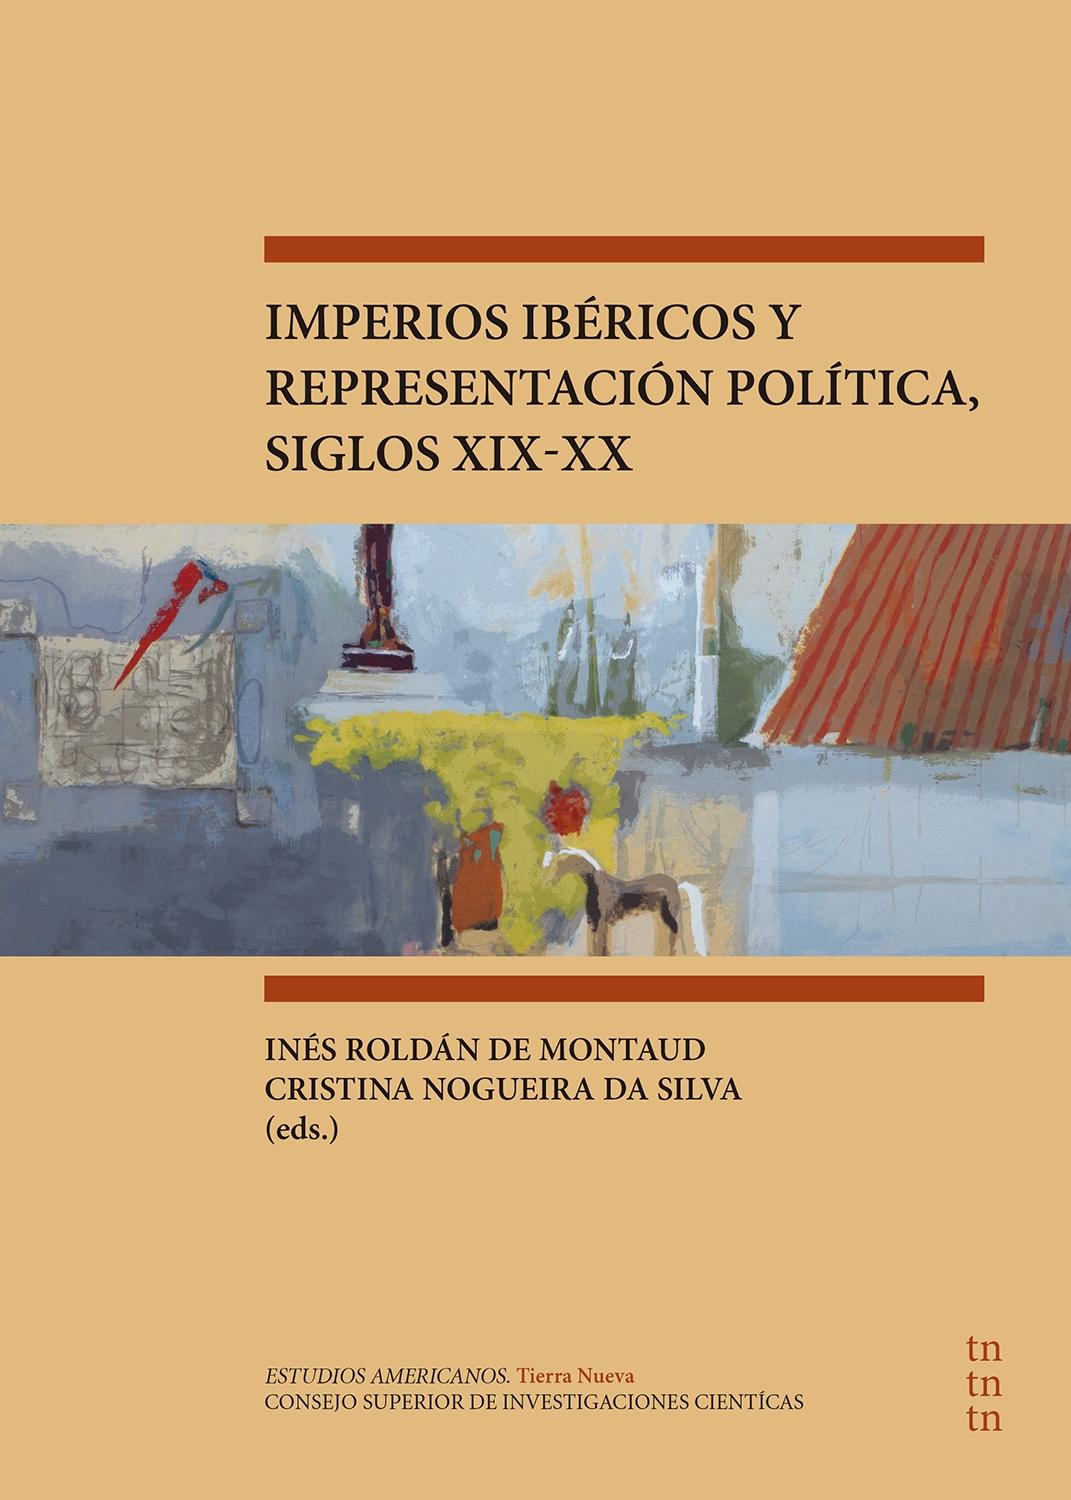 IMPERIOS IBERICOS Y REPRESENTACION POLITICA, SIGLOS XIX-XX